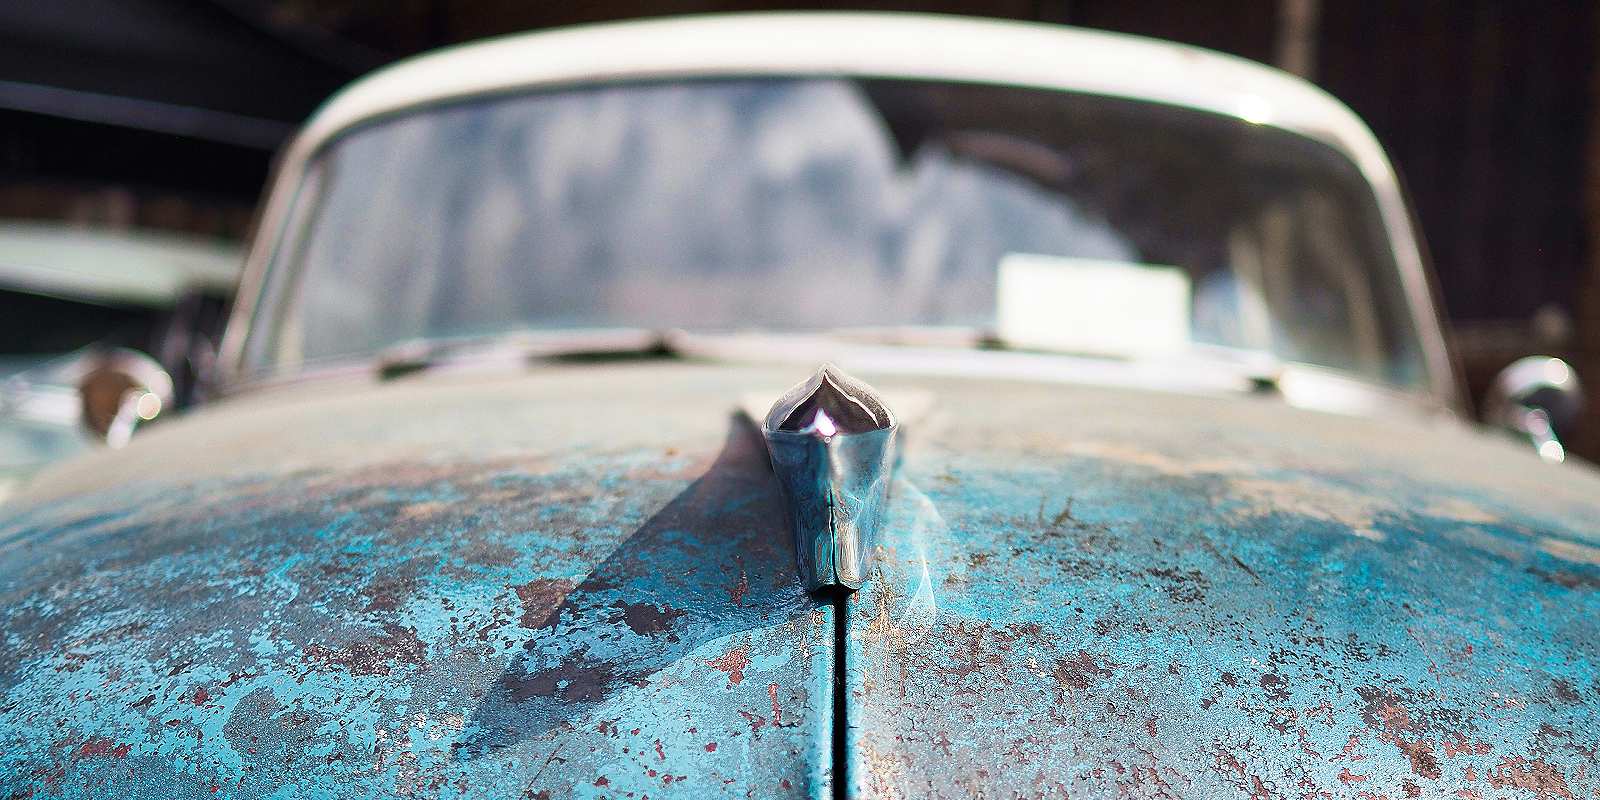 Rust on the car фото 65